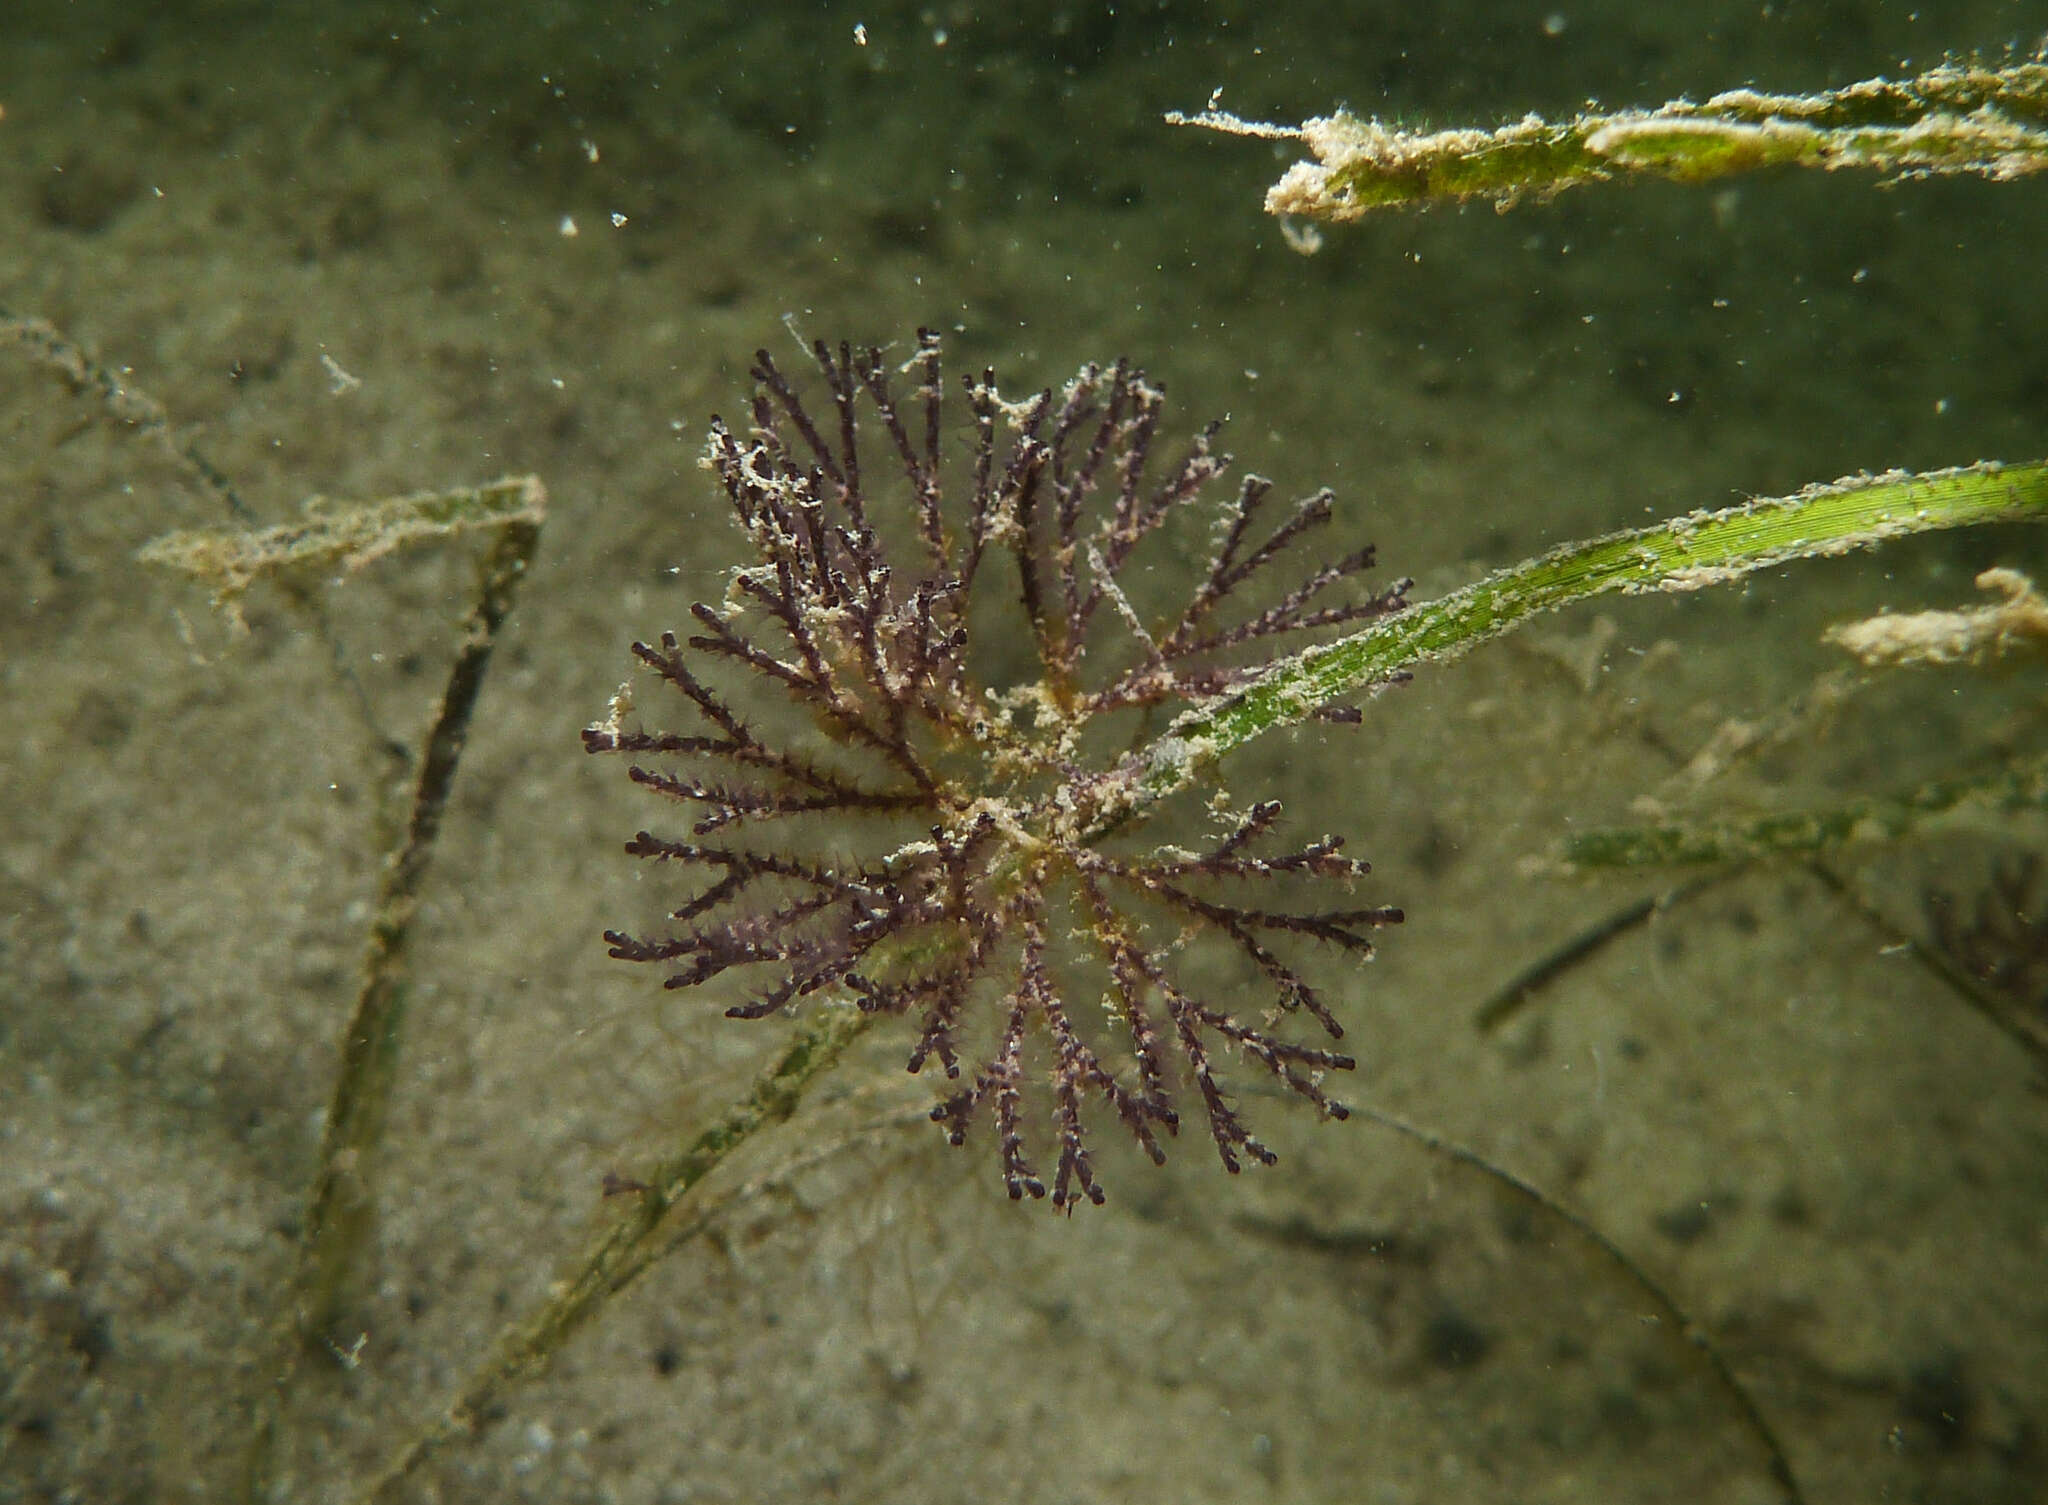 Image of Brown bryozoan